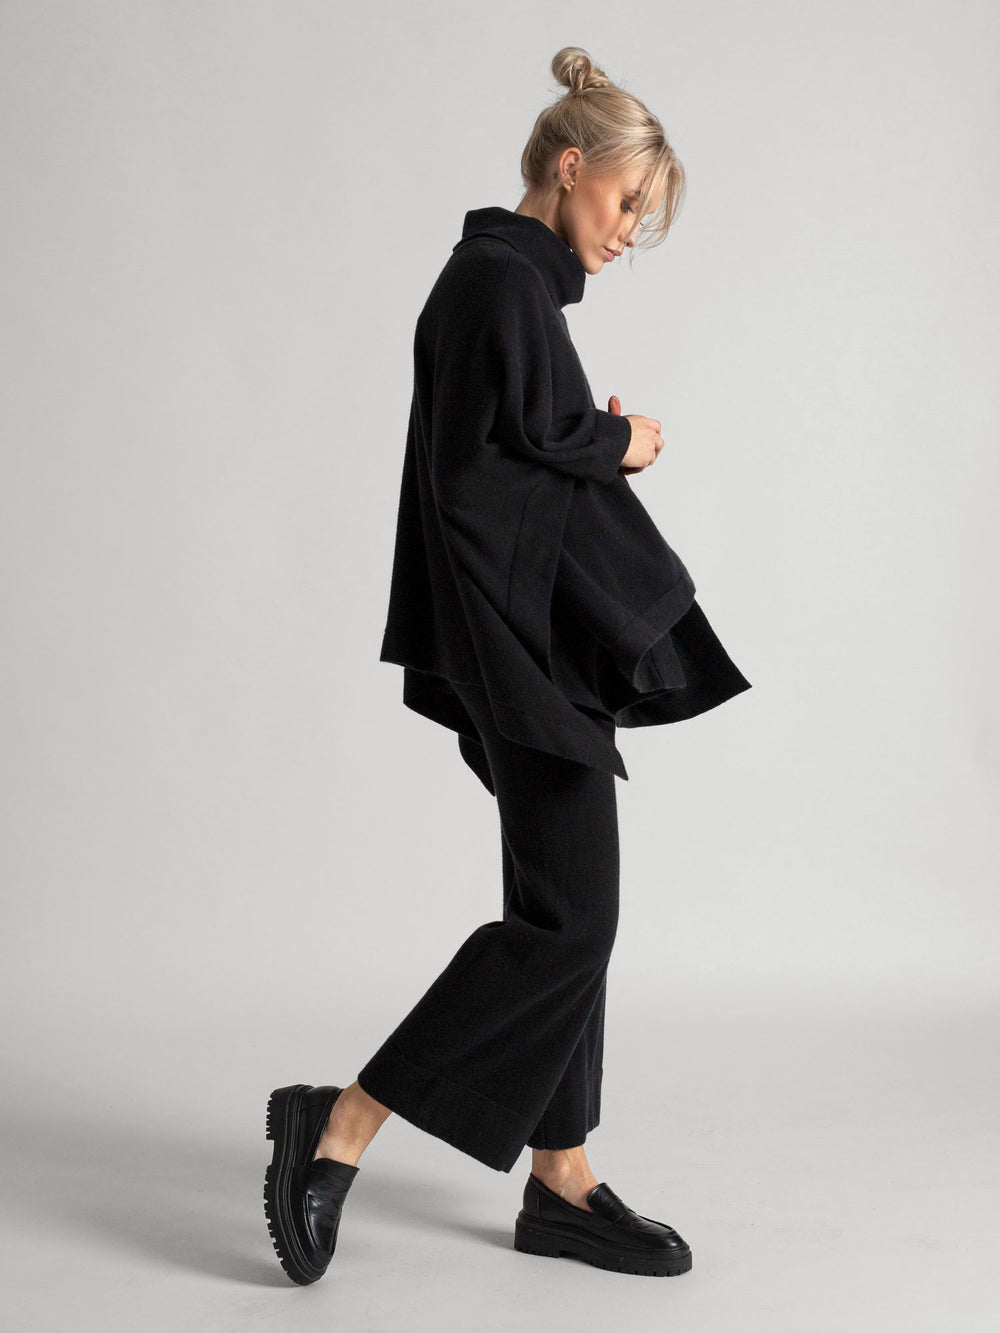 Cashmere poncho, turtle neck  in 100% pure cashmere. Color: black. Scandinavian design by Kashmina.